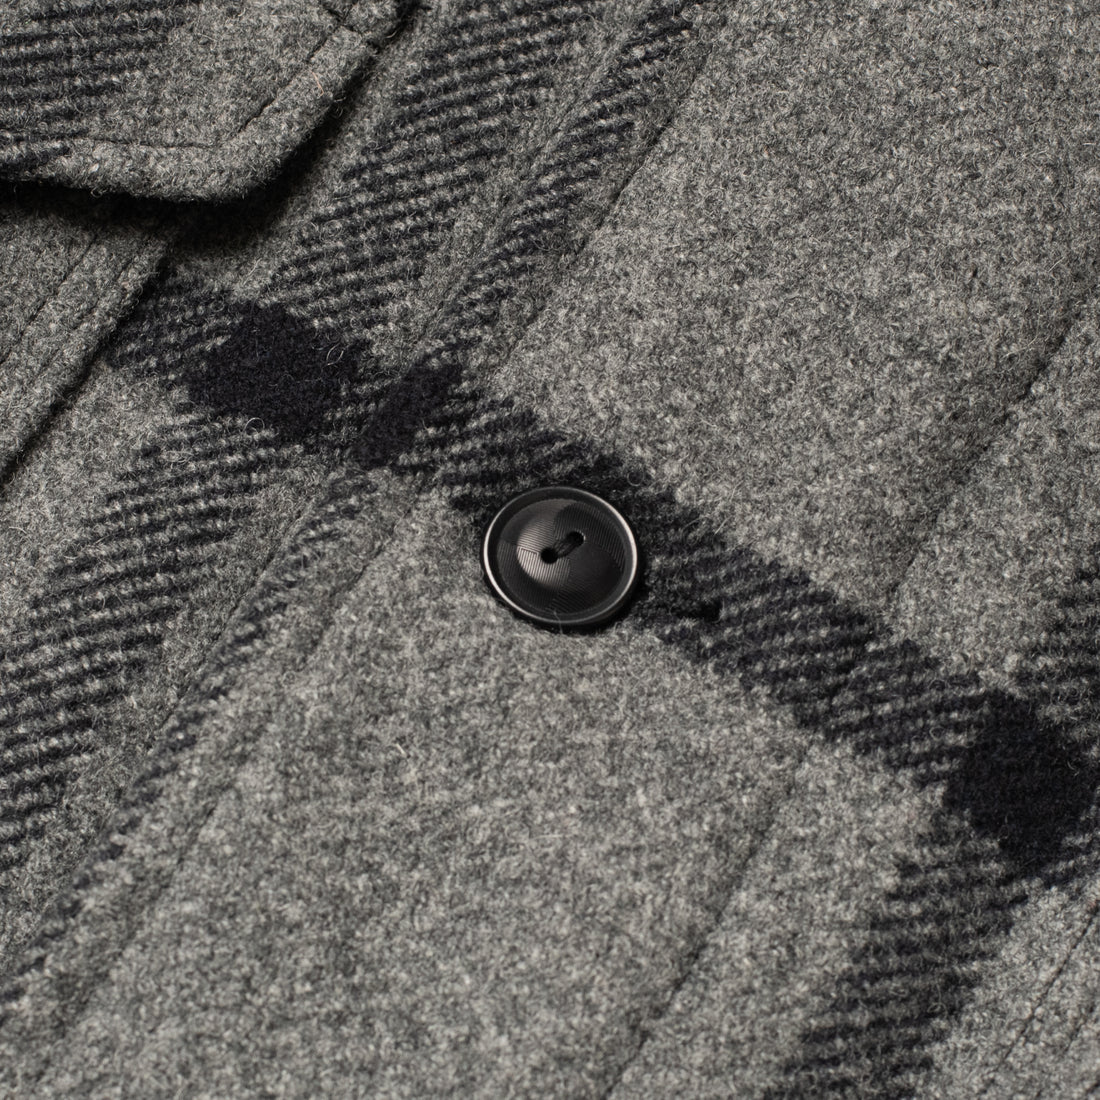 Bryceland's Hunting Jacket Black/Grey Plaid Wool